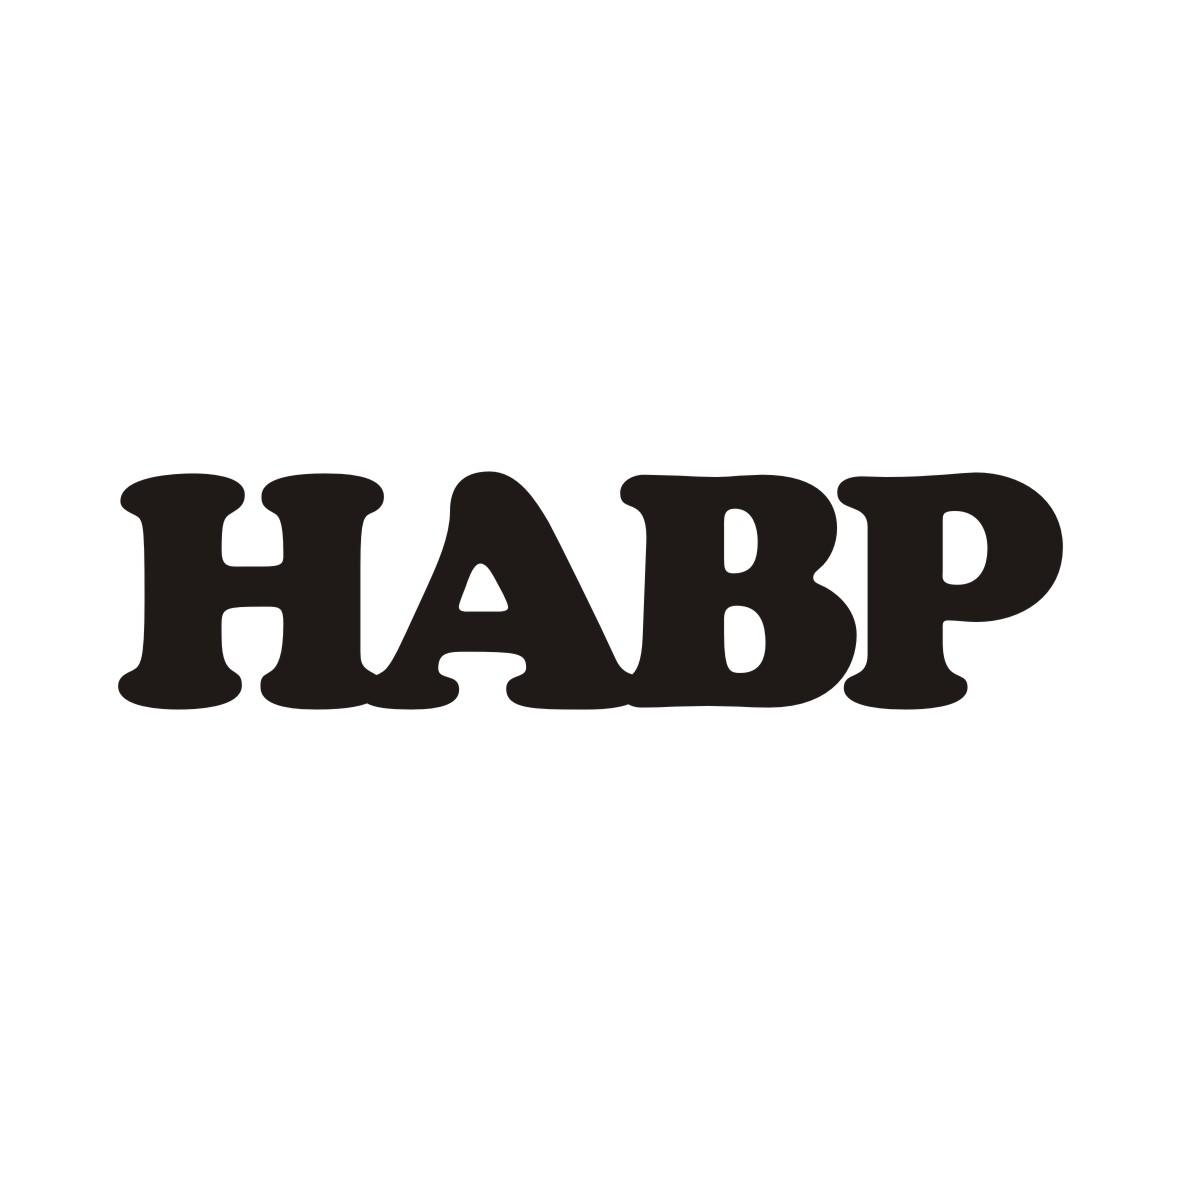 HABP商标转让